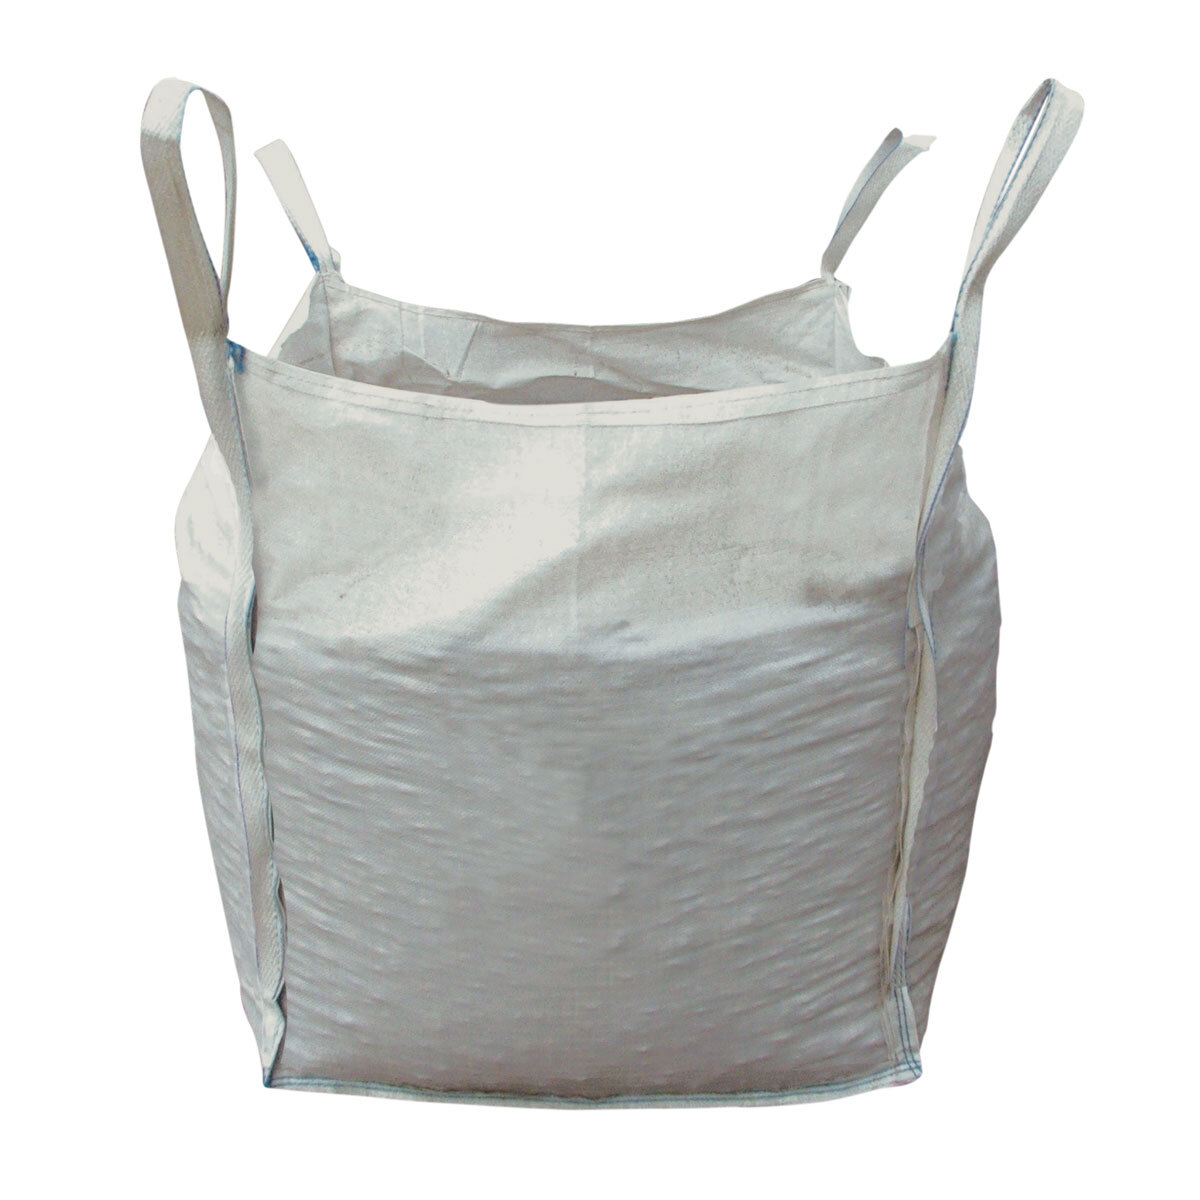 Kelkay 20-40mm Charcoal Slate Aggregate Bulk Bag - Approx 750kg